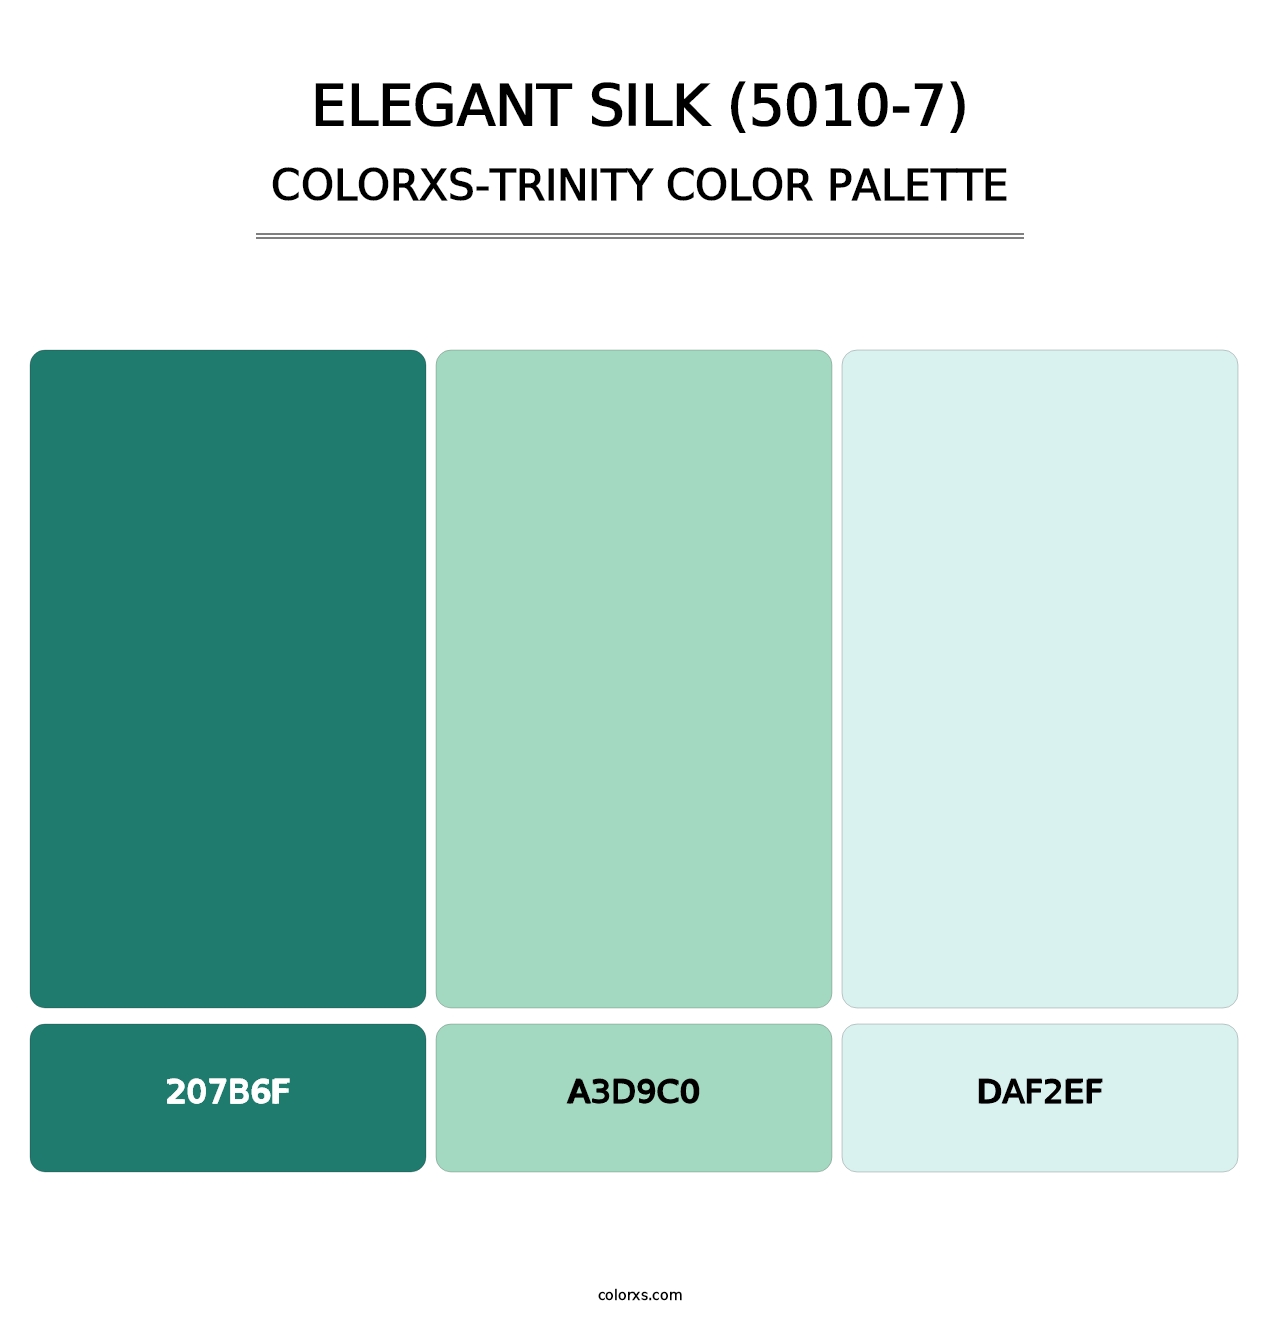 Elegant Silk (5010-7) - Colorxs Trinity Palette